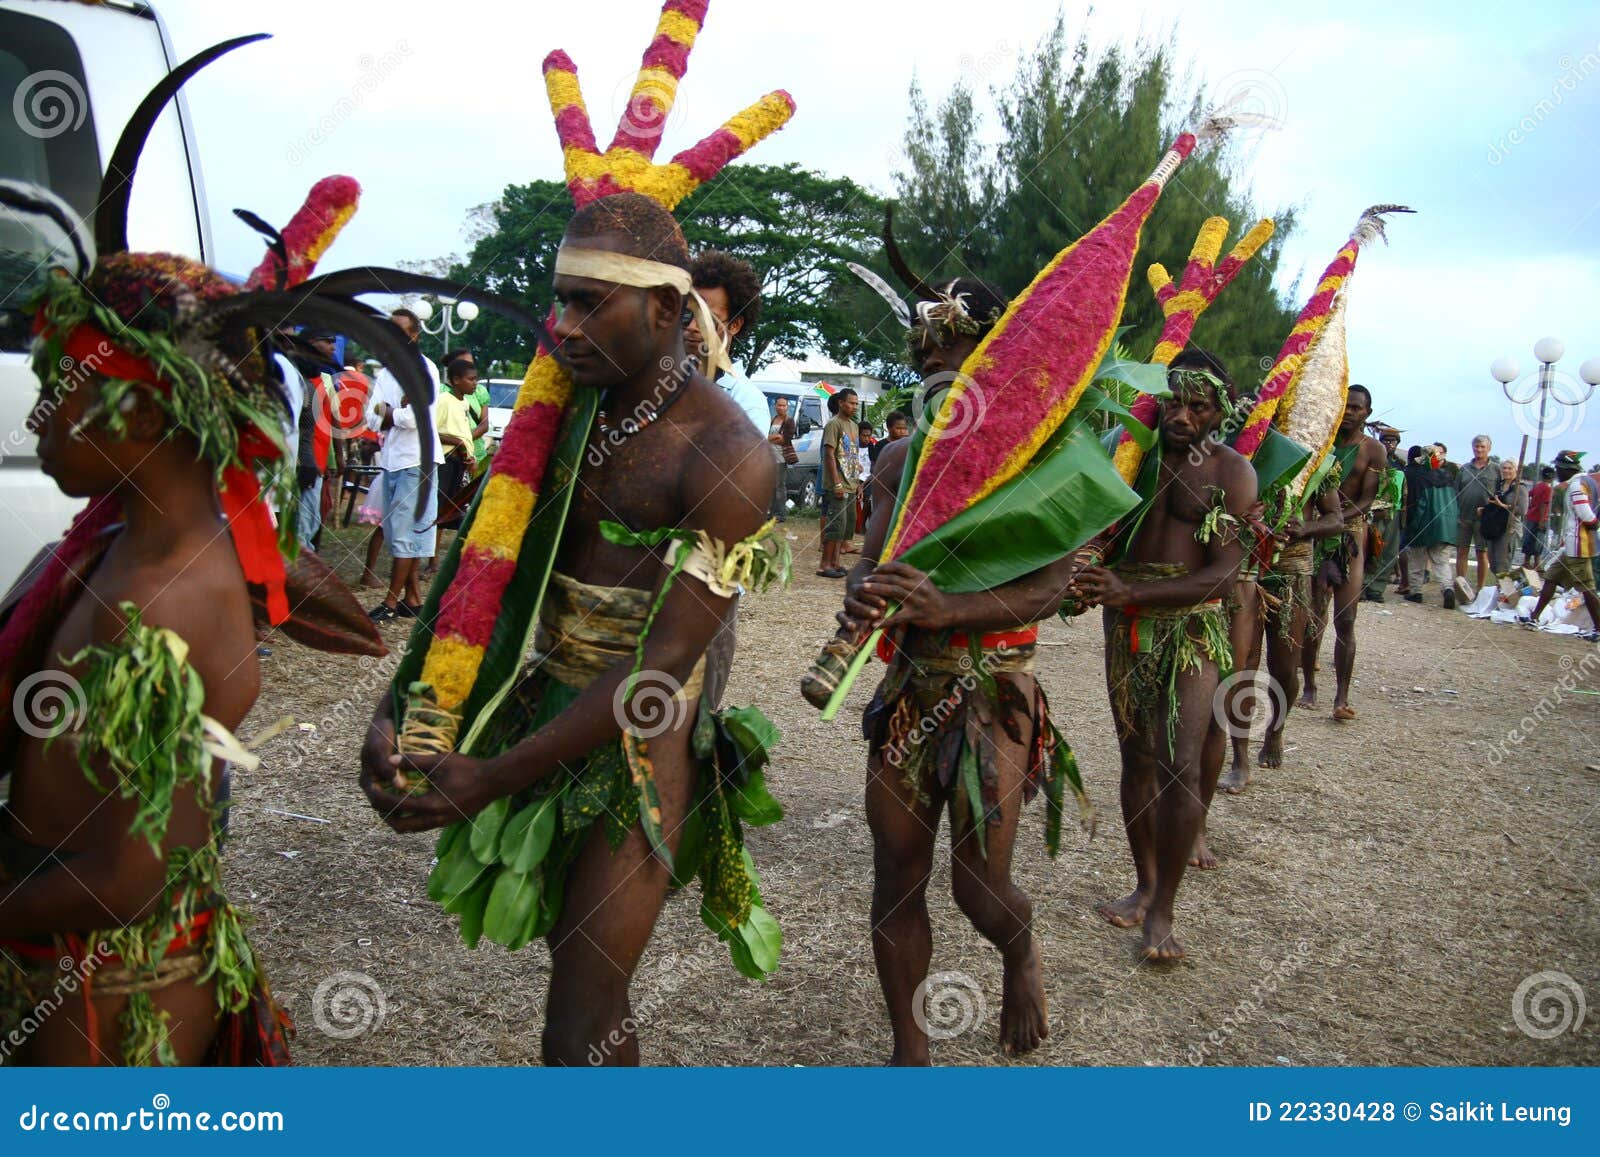 Vanuatu Ethnicity - wide 4